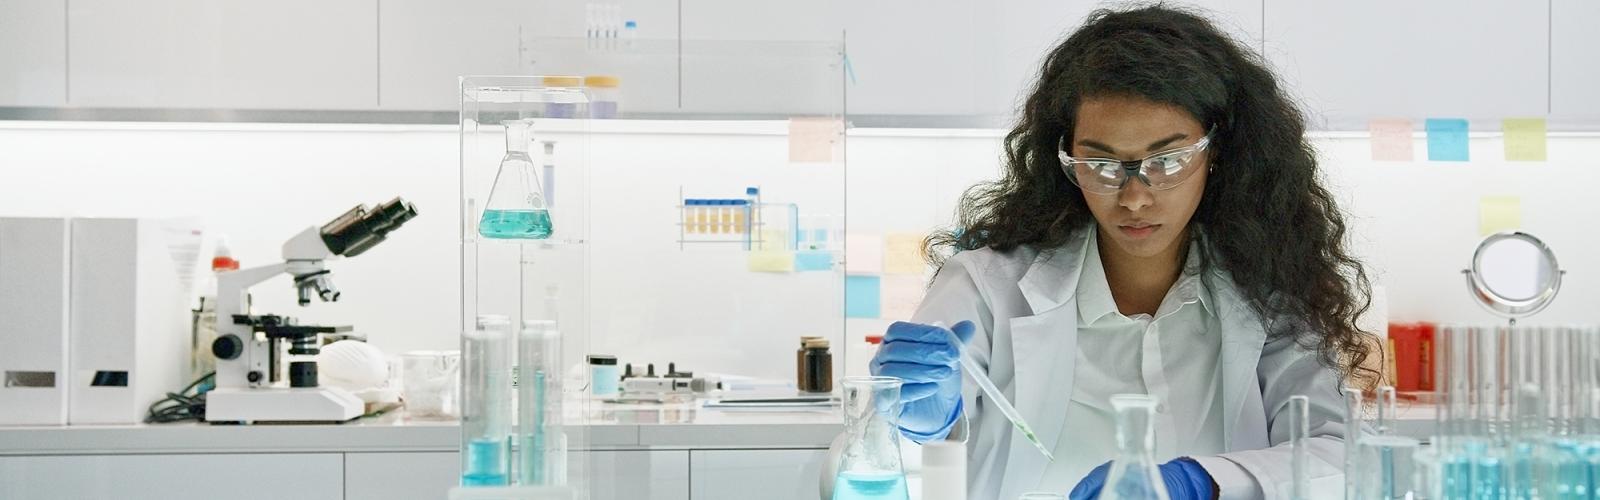 Female scientist working on laboratory glassware